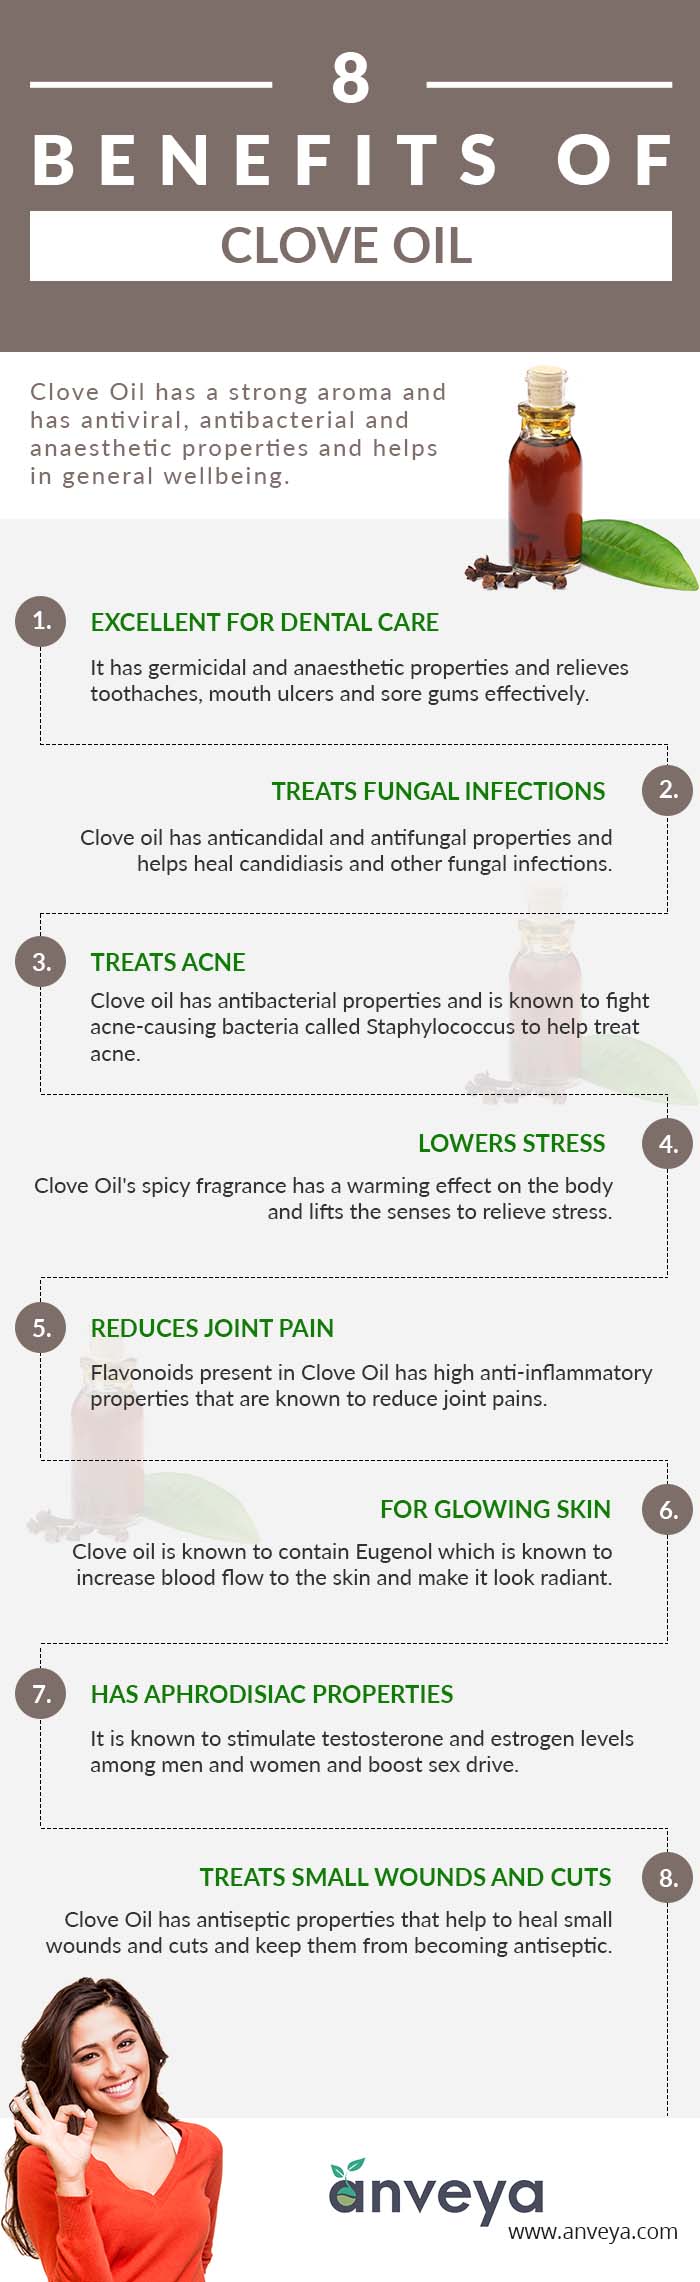 9 Benefits of Clove Oil 